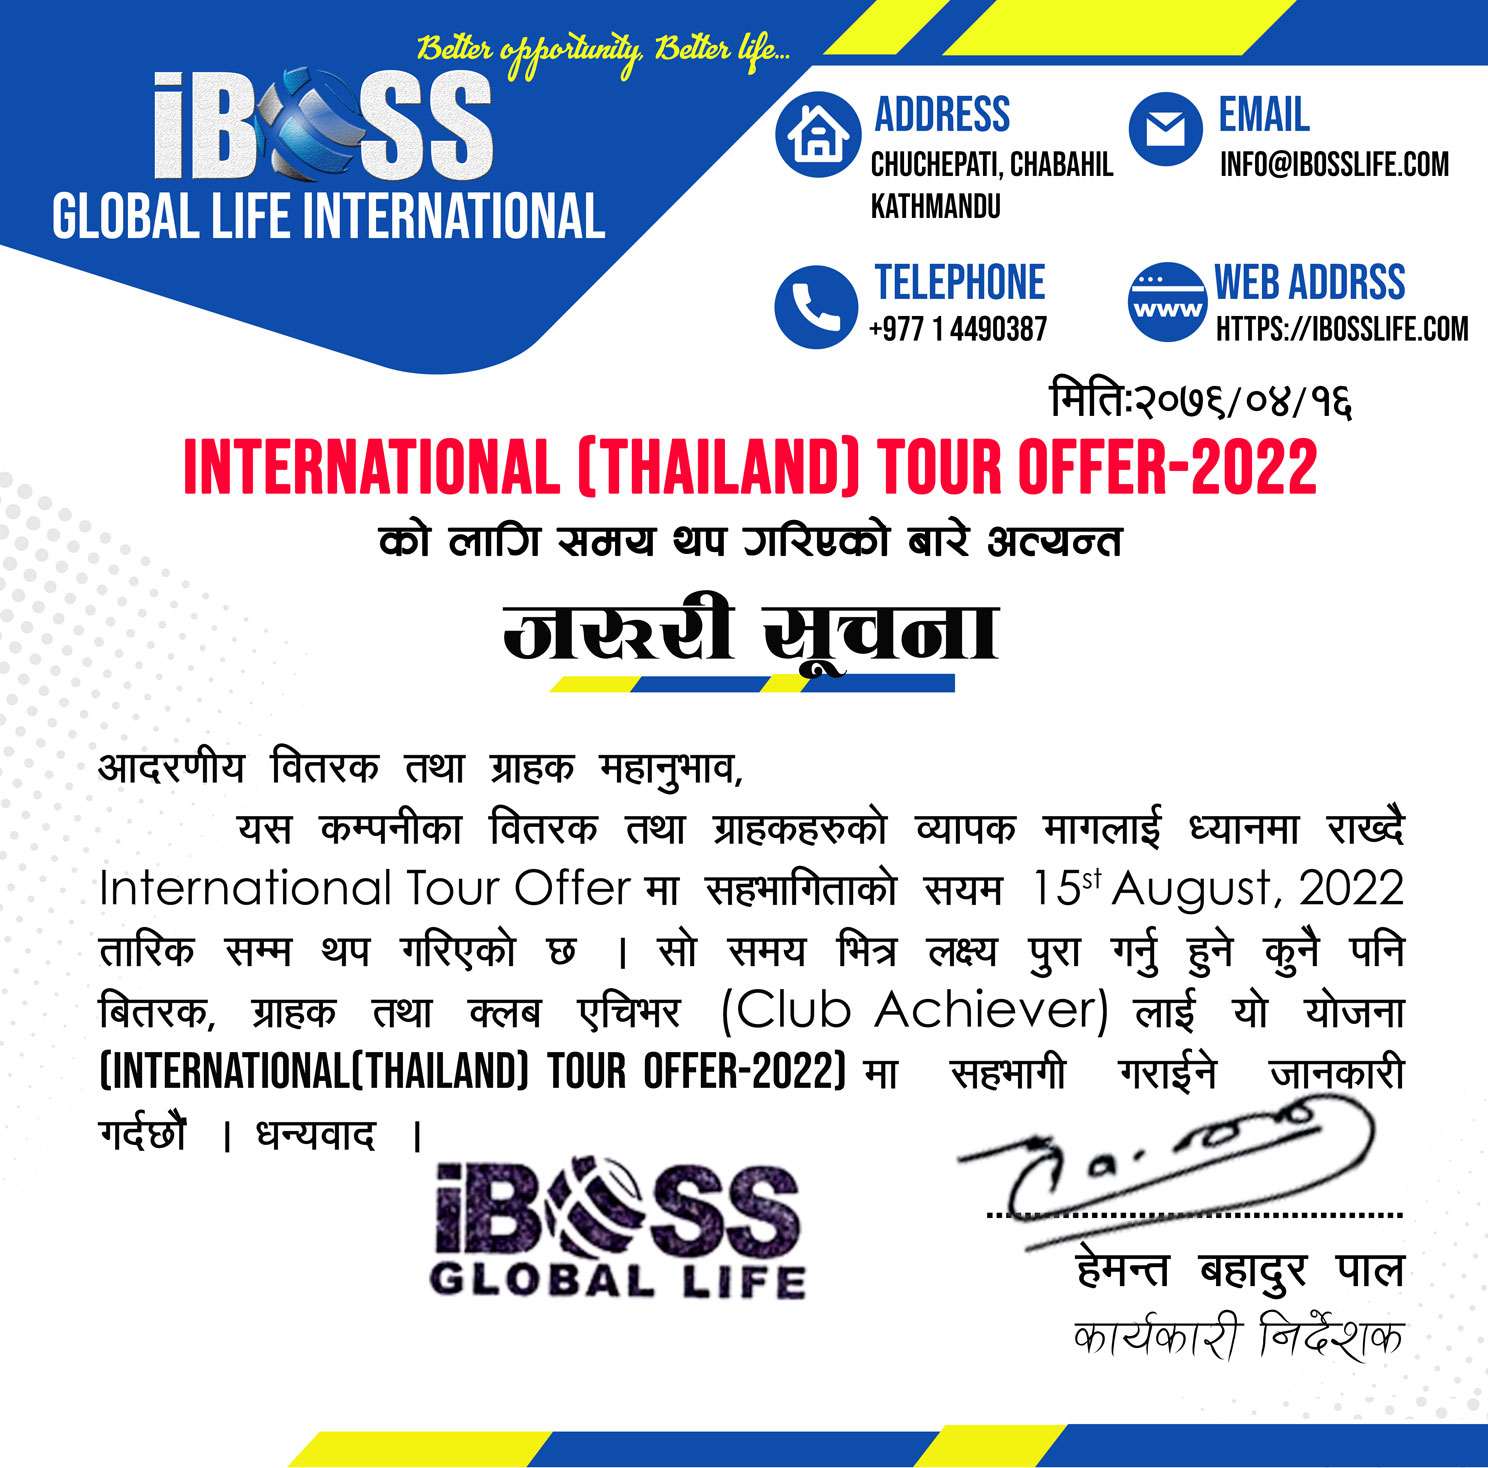 International (Thailand) Tour Offer-2022